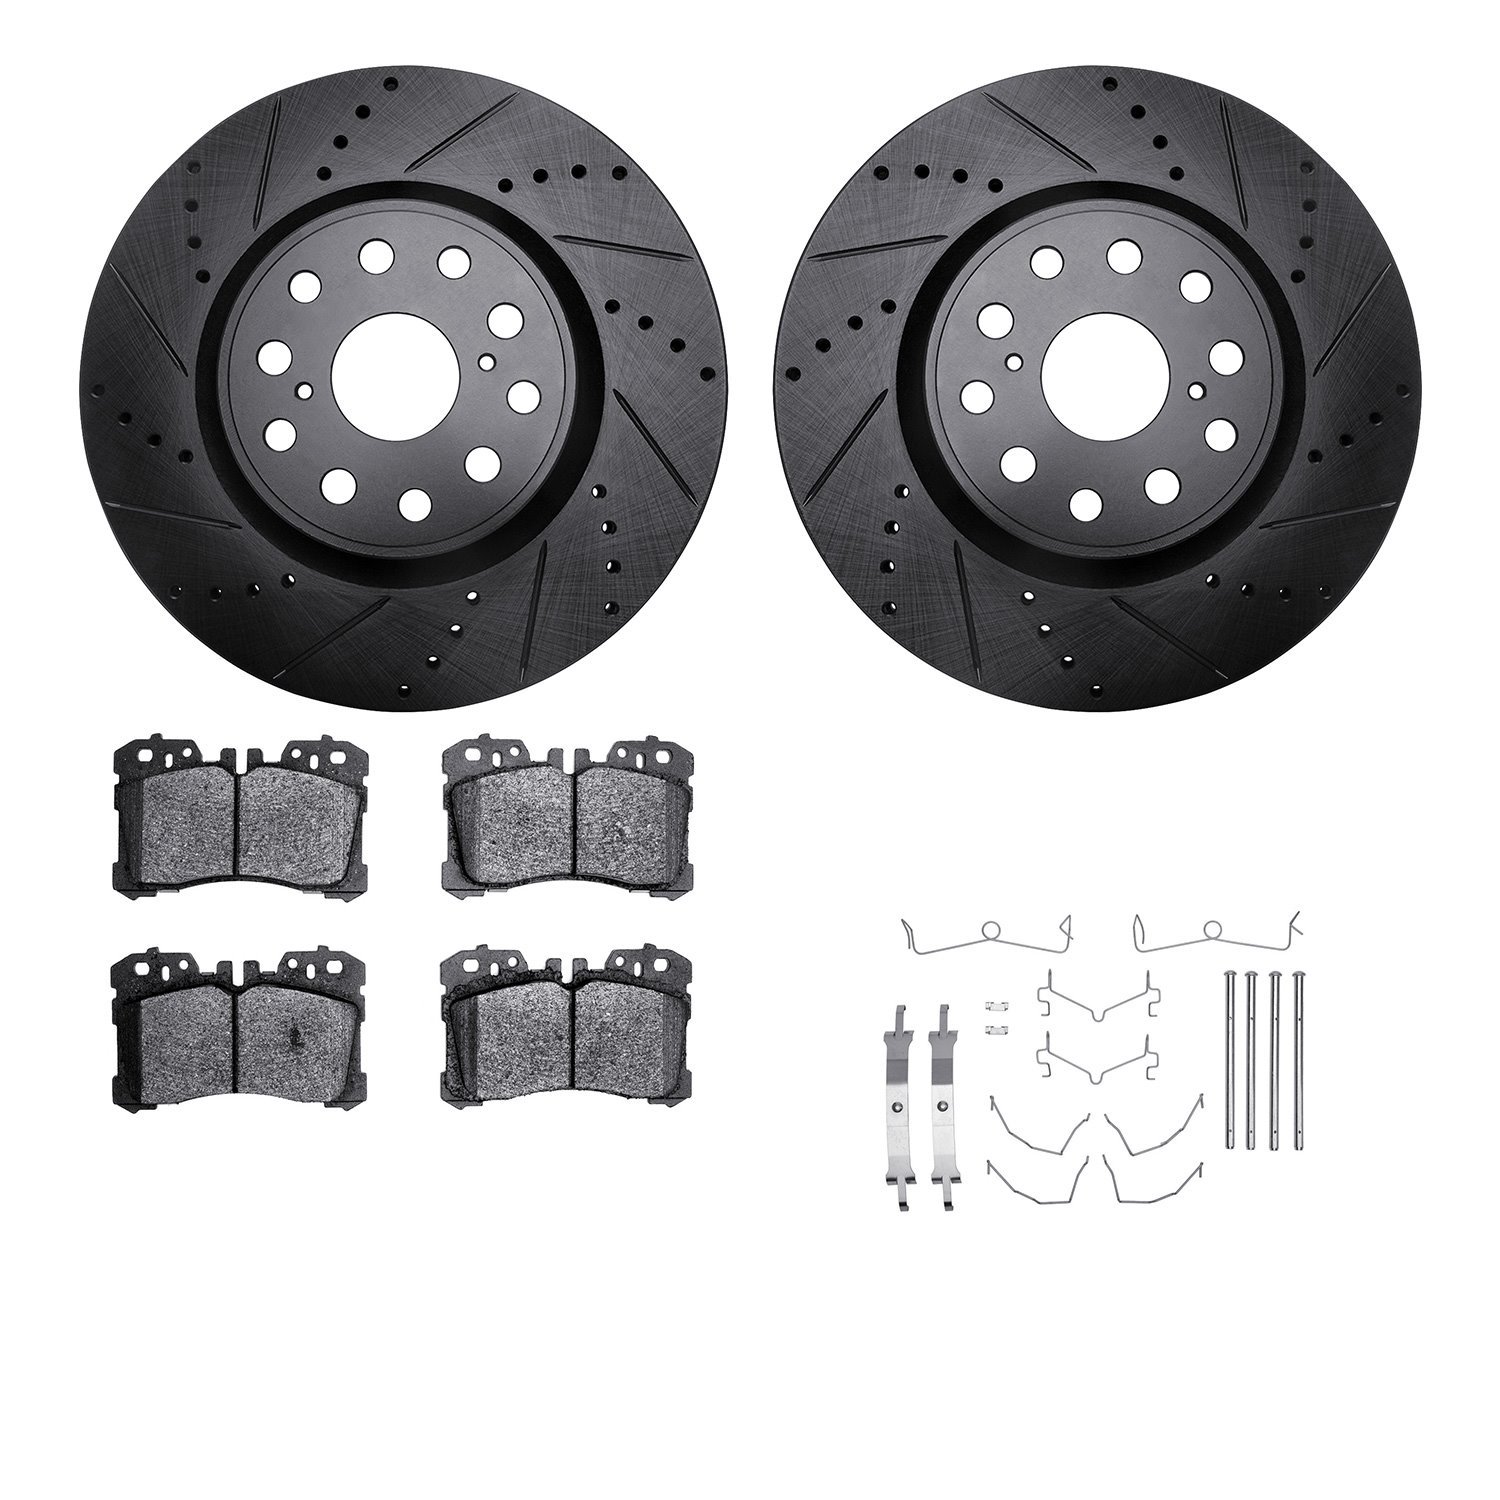 8312-75024 Drilled/Slotted Brake Rotors with 3000-Series Ceramic Brake Pads Kit & Hardware [Black], Fits Select Lexus/Toyota/Sci